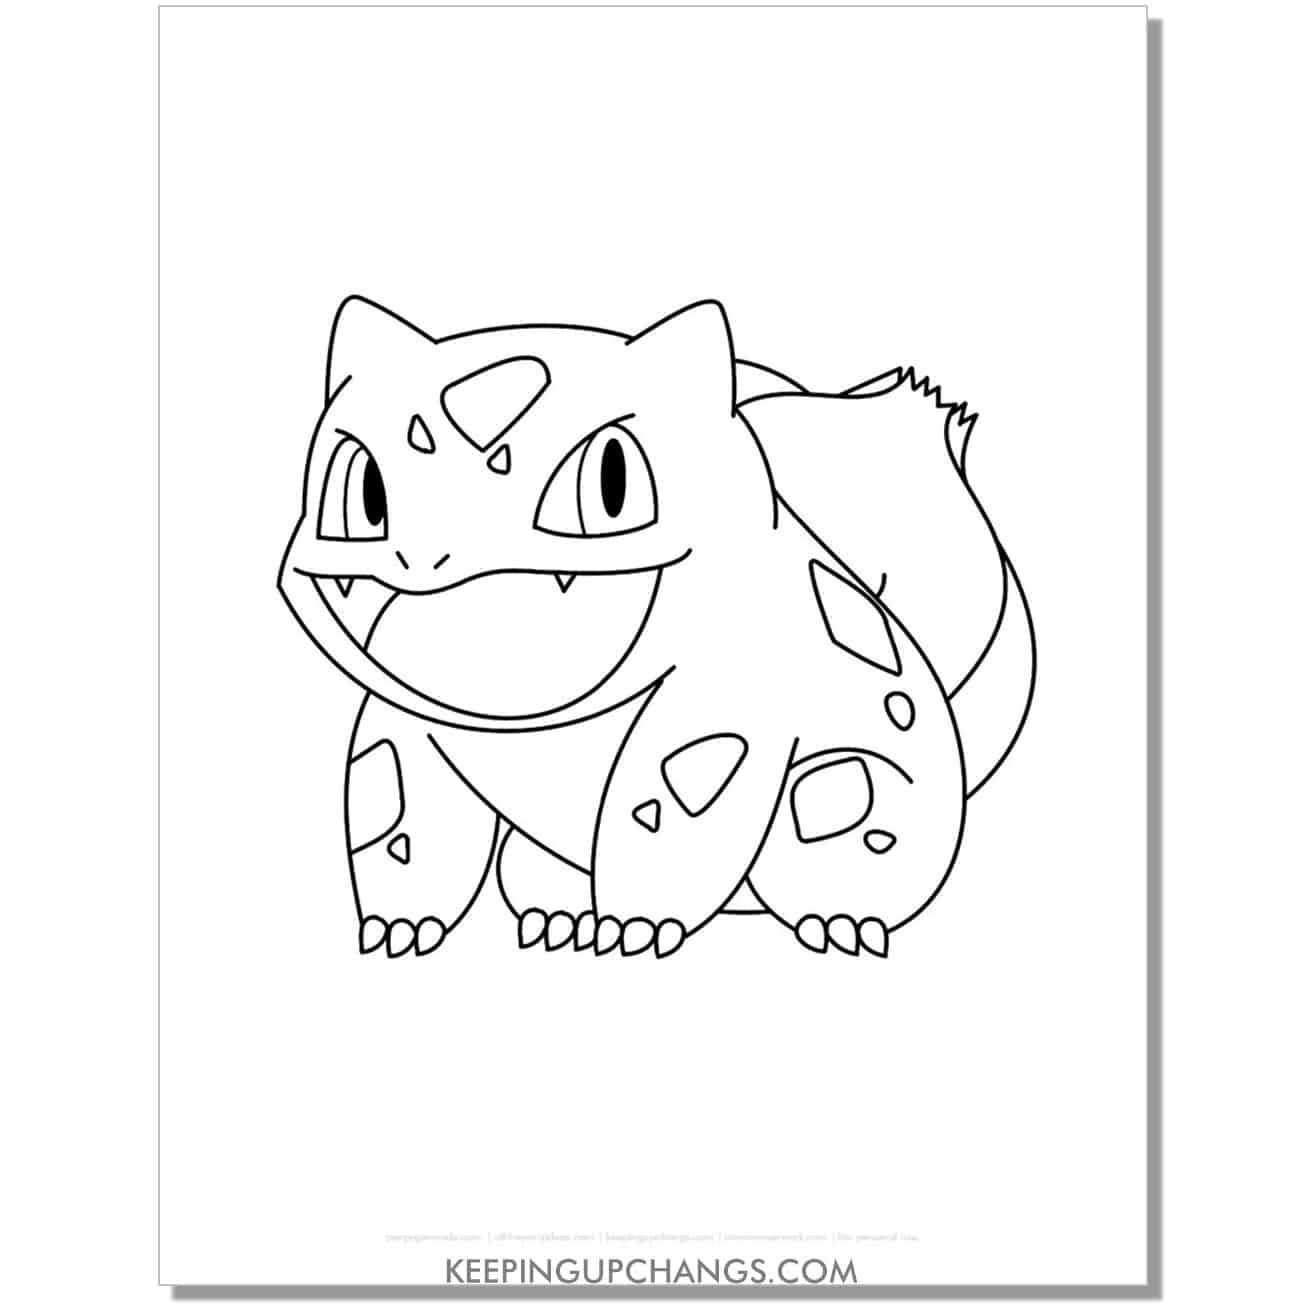 bulbasaur pokemon coloring page, sheet.